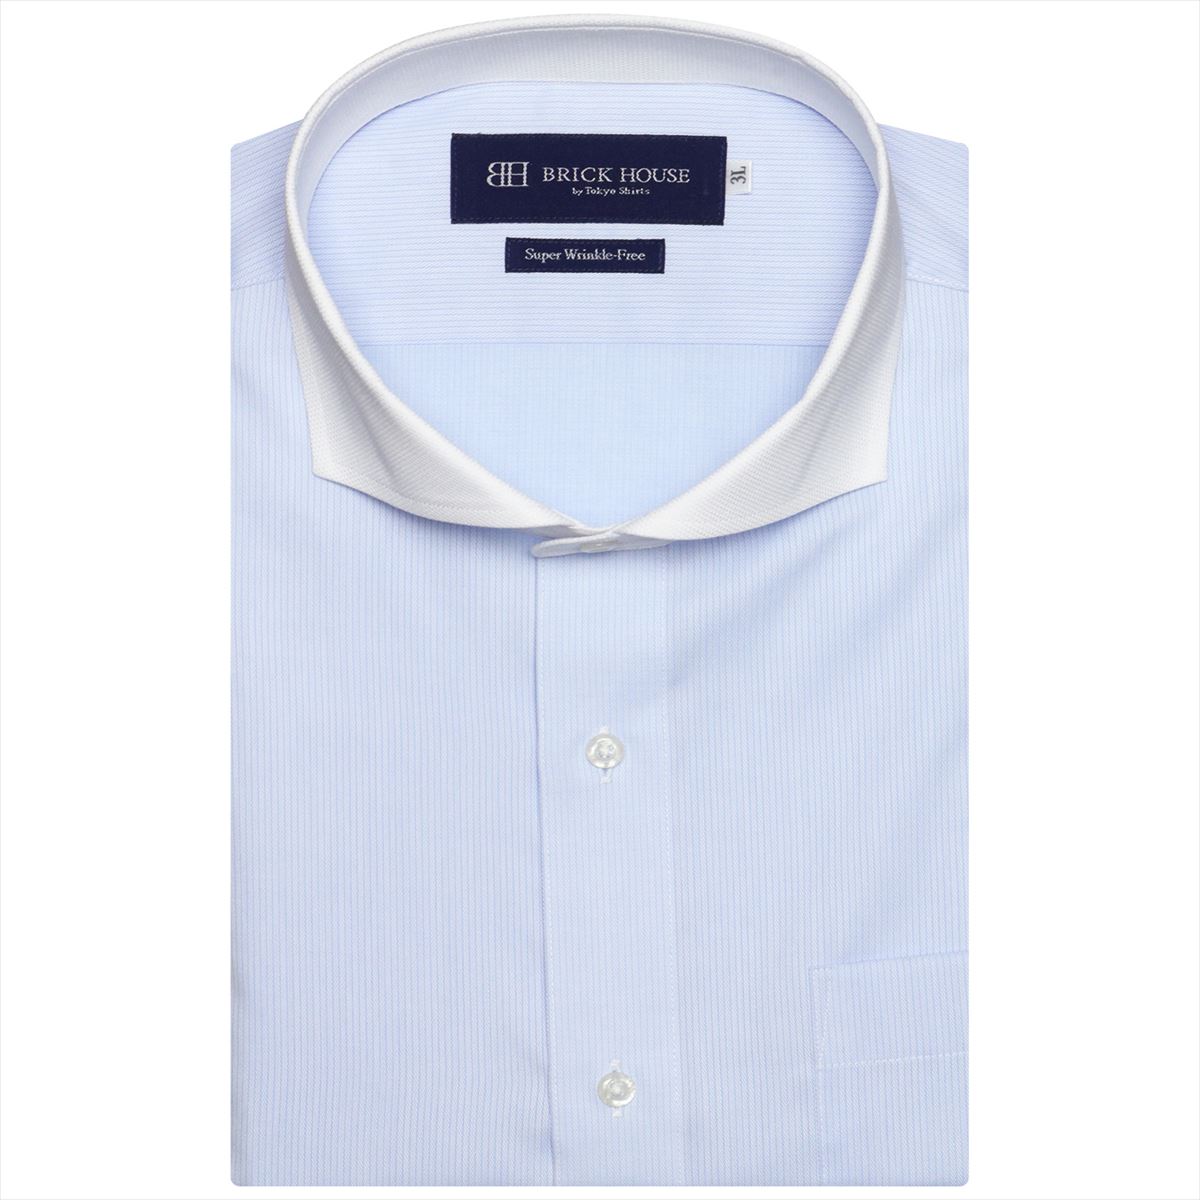 【10%OFF】【SALE】【超形態安定】 ホリゾンタルワイド 半袖 形態安定 ワイシャツ